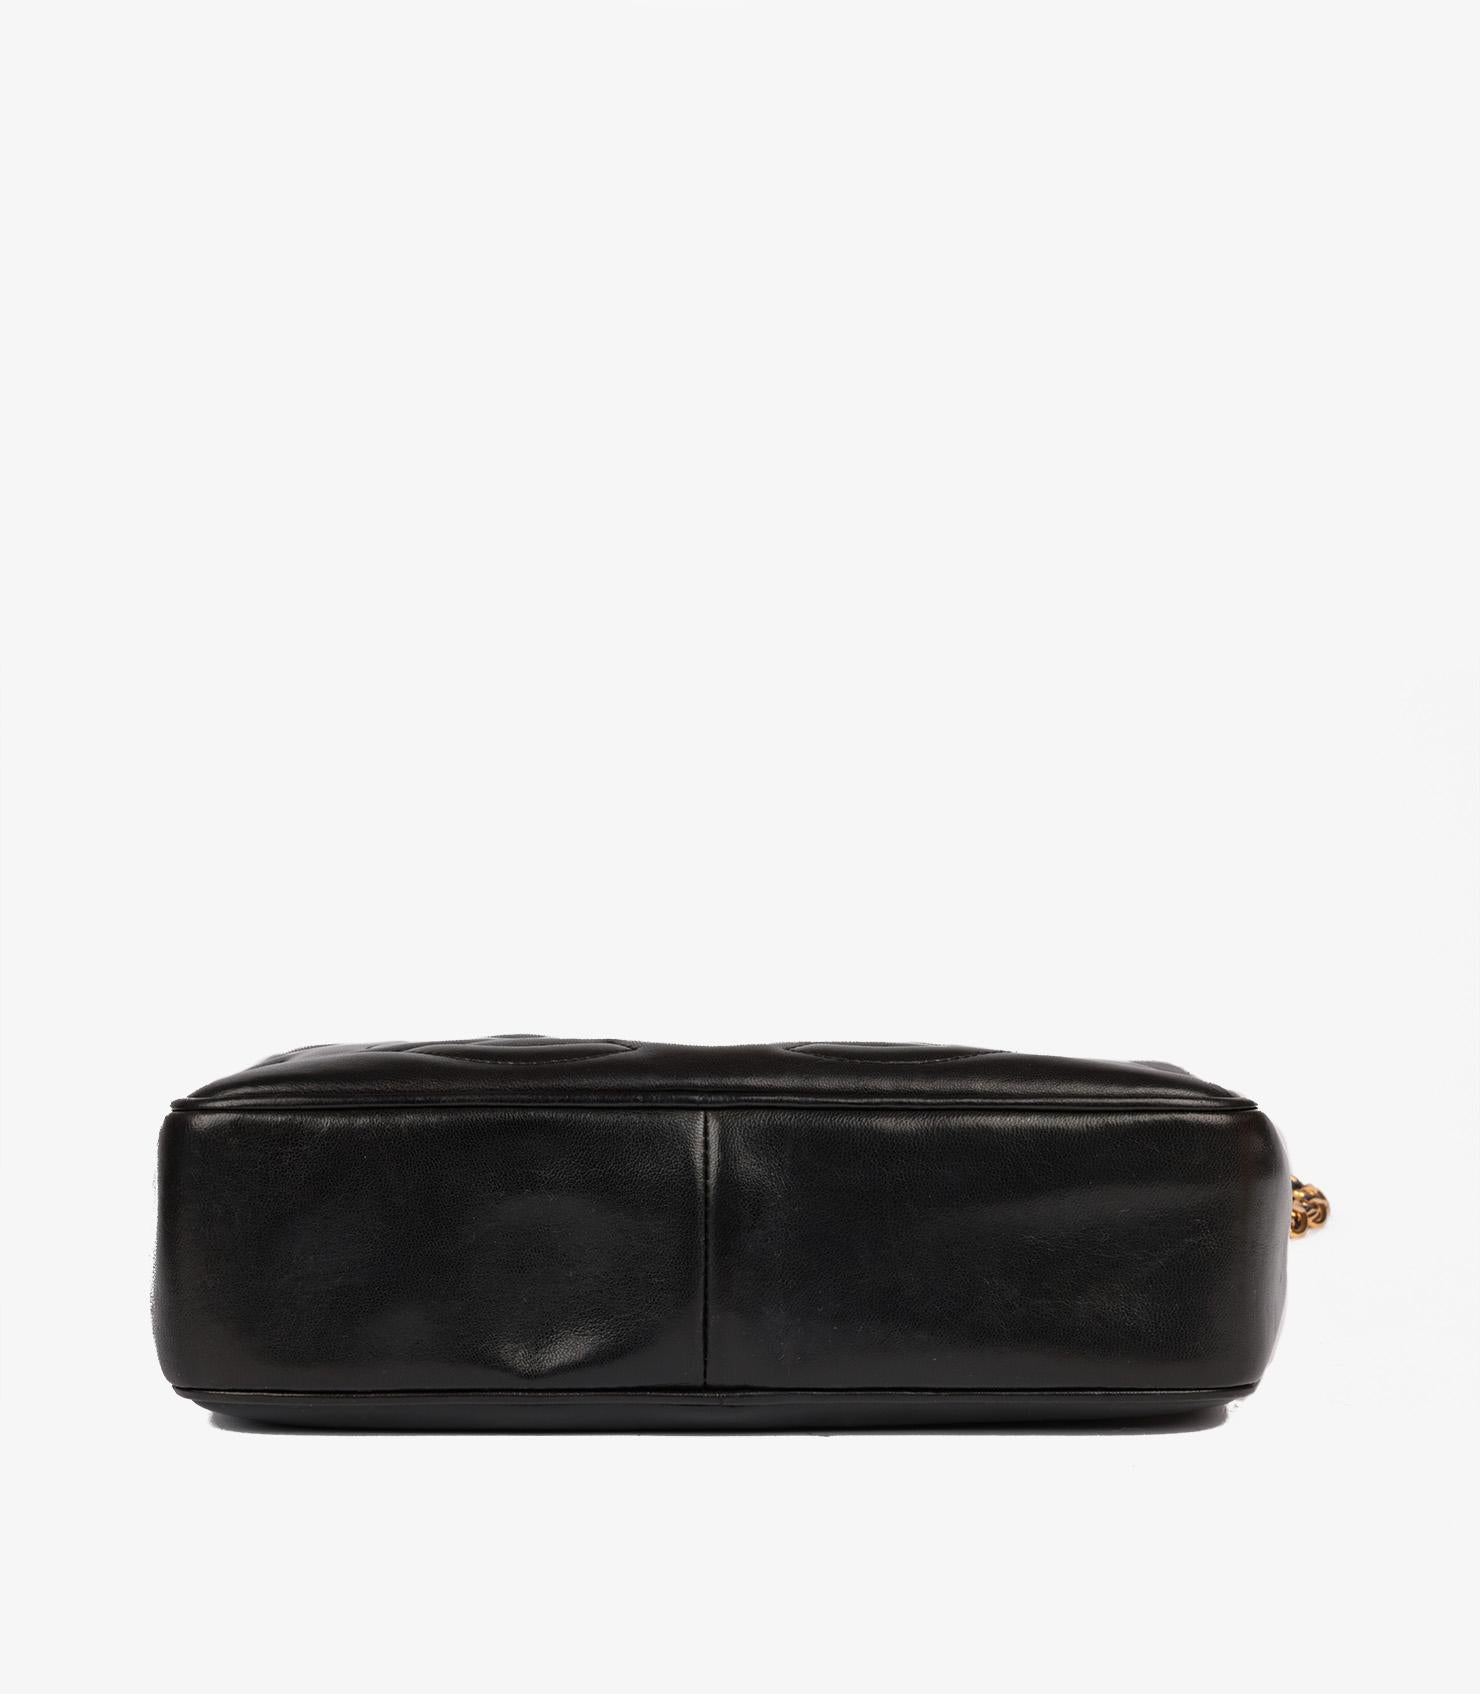 Chanel Black Smooth Lambskin Leather Vintage Small Fringe Timeless Camera Bag 1